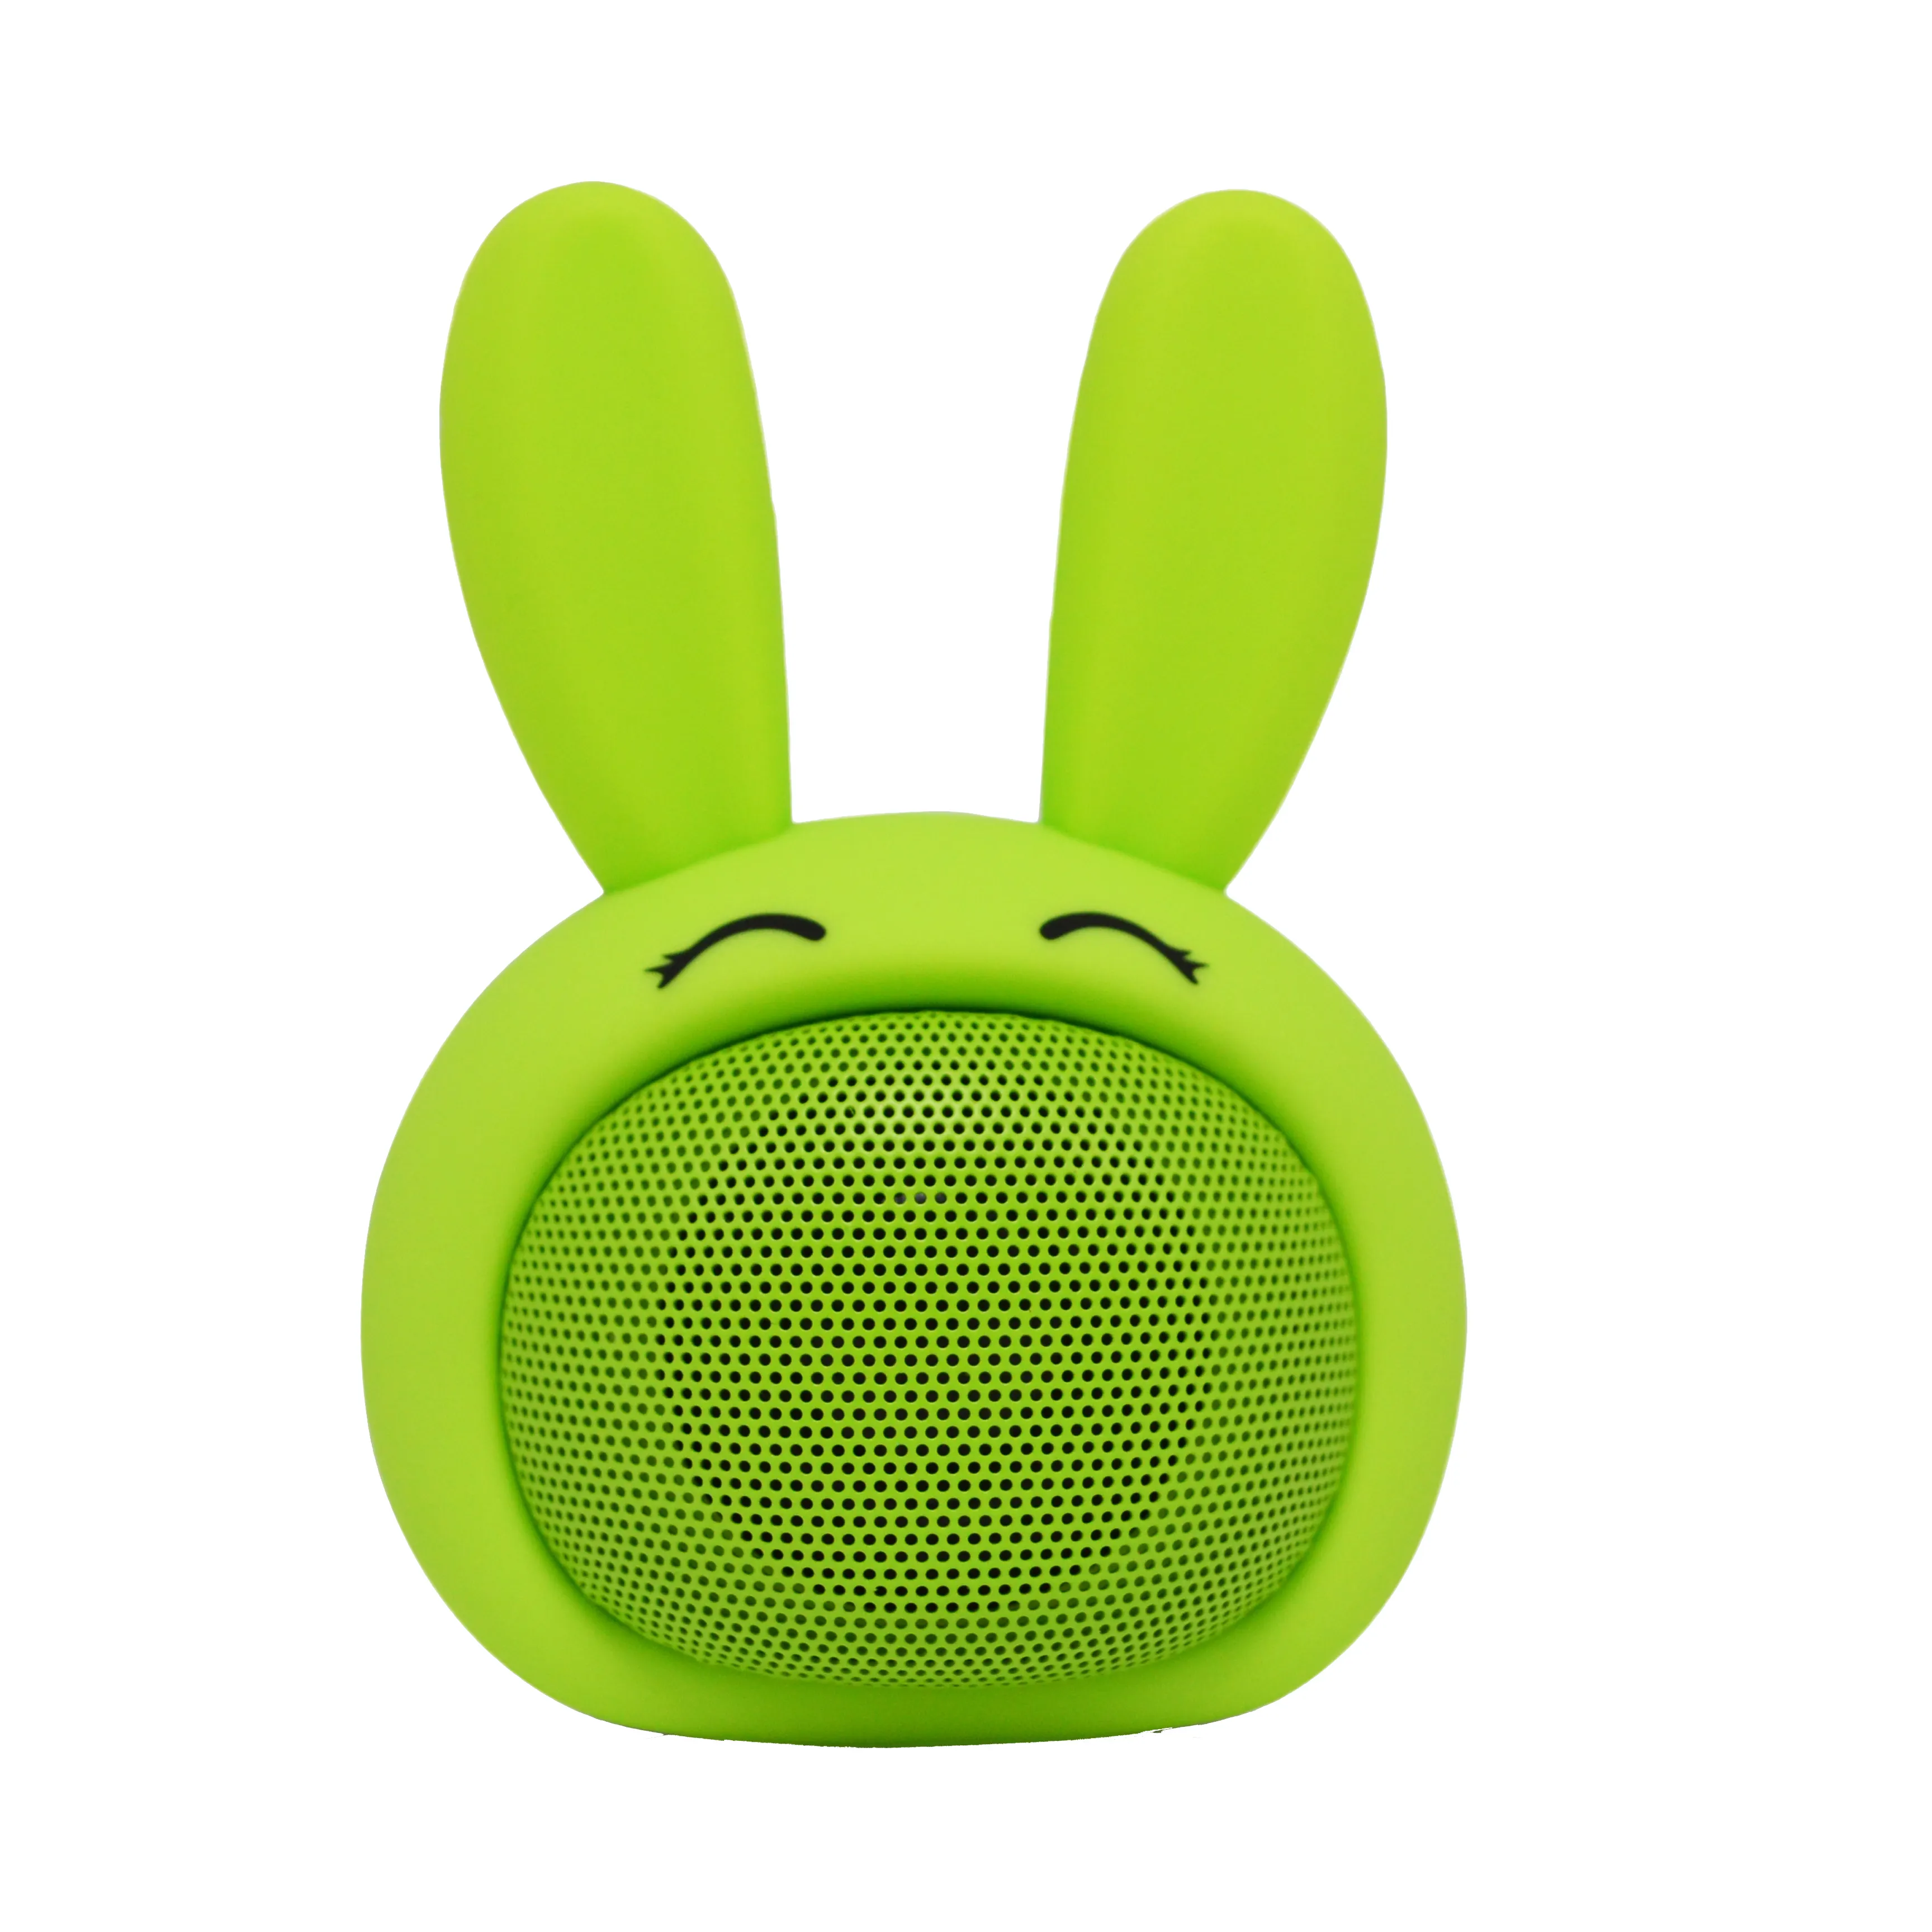 New gadgets 2021 dj music Rabbit mini speakers portable good sound system speaker electronics speaker